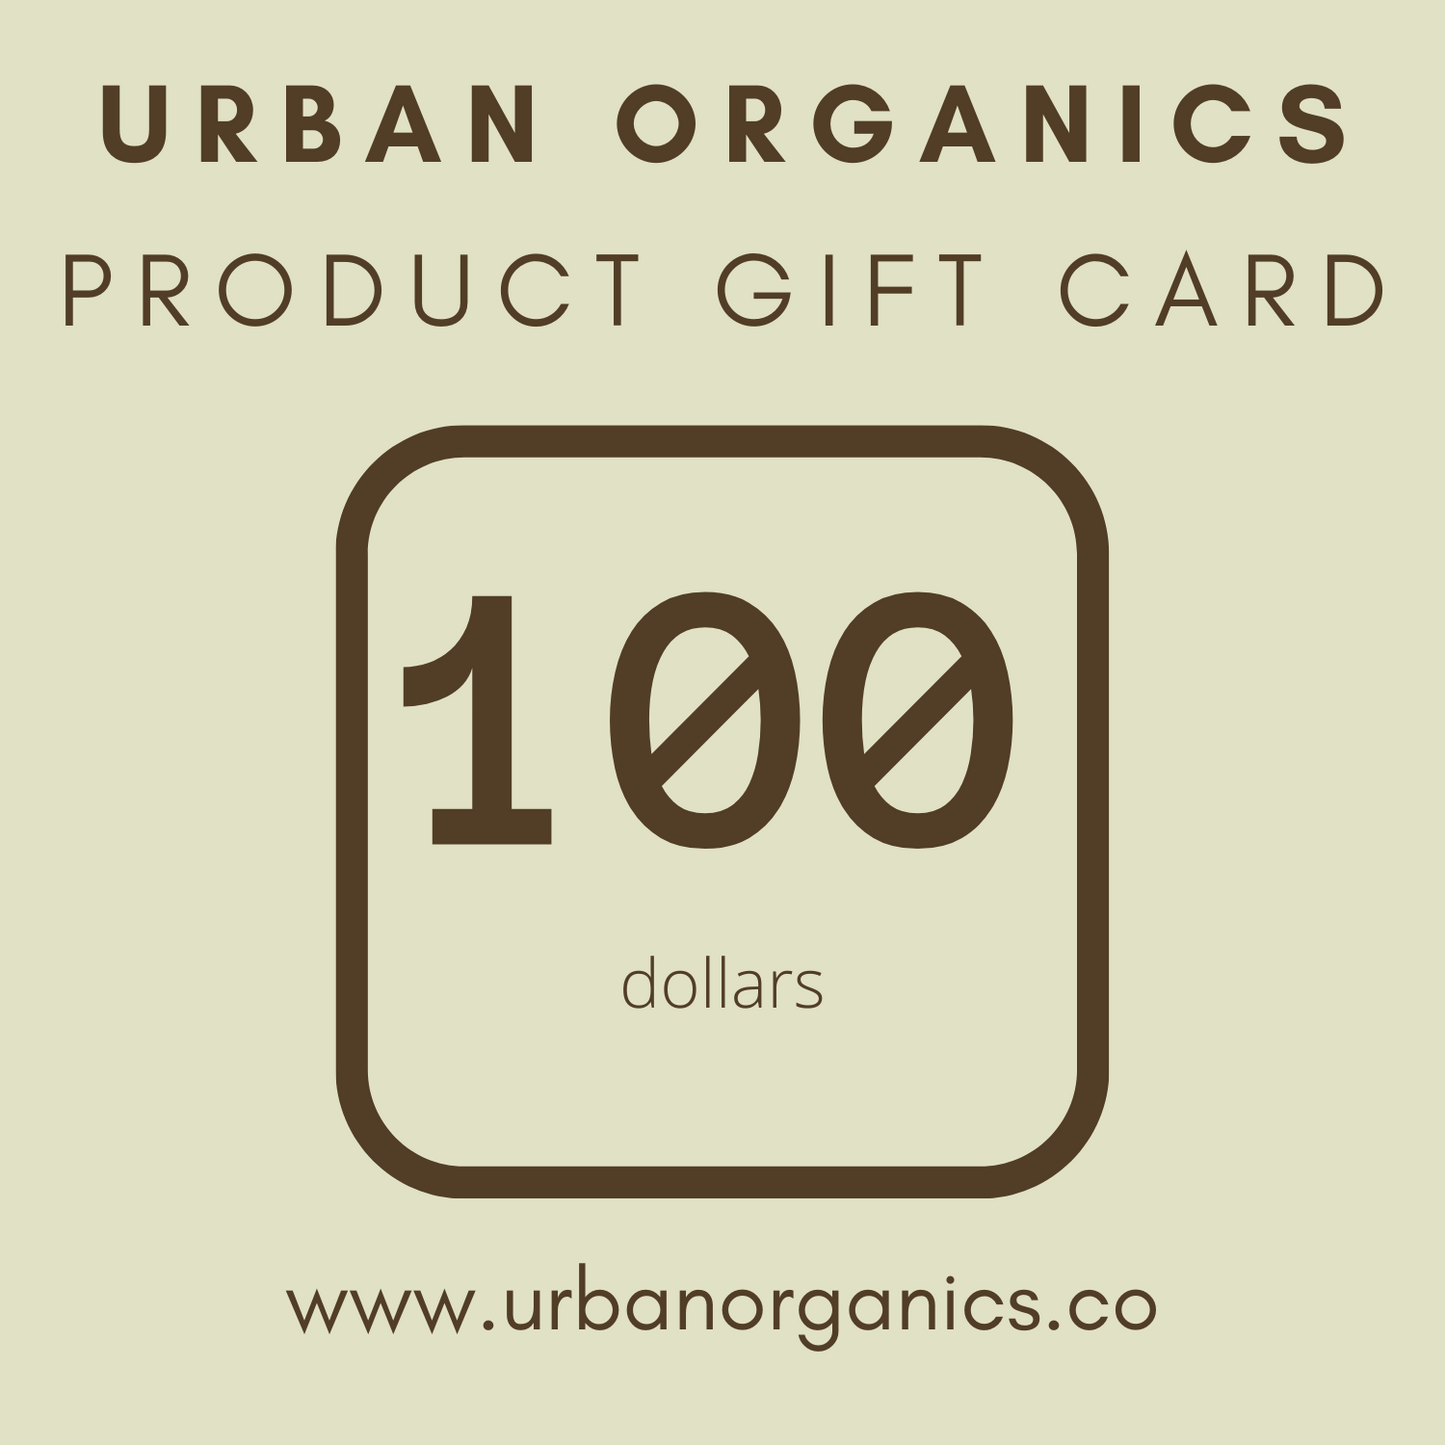 Urban Organics Product Gift Card